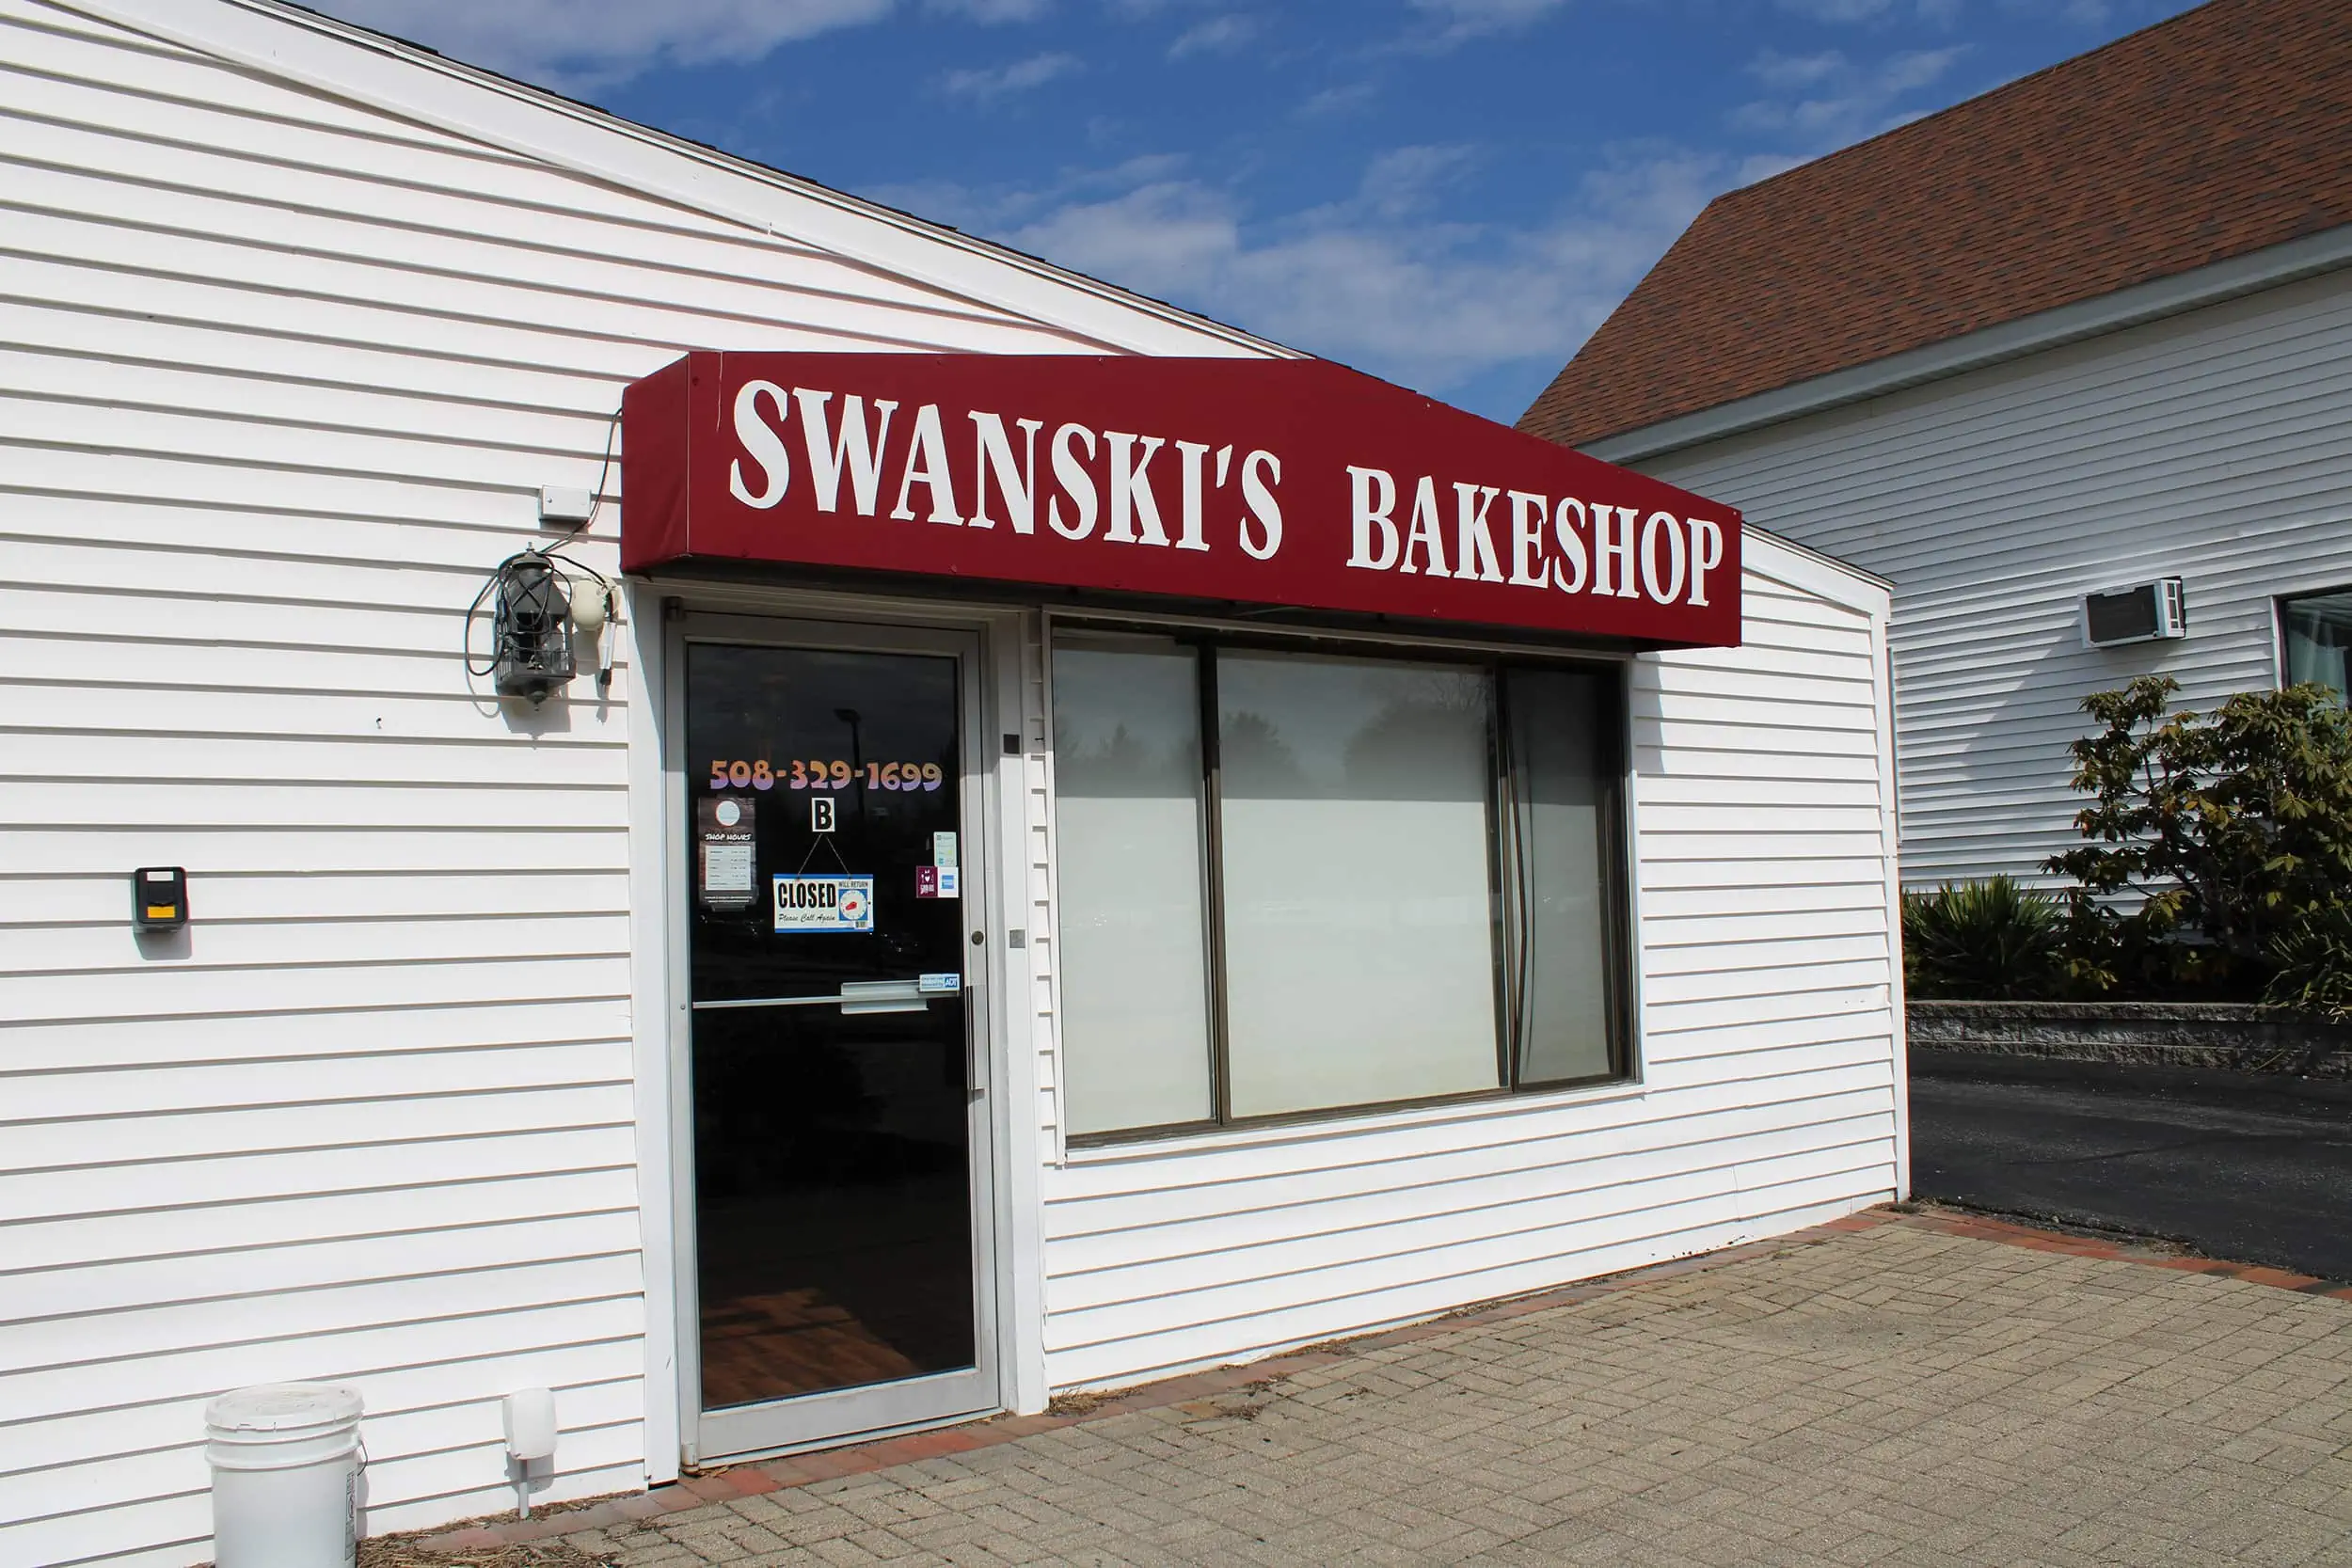 Swanski’s Bakeshop in Westborough a sweet success